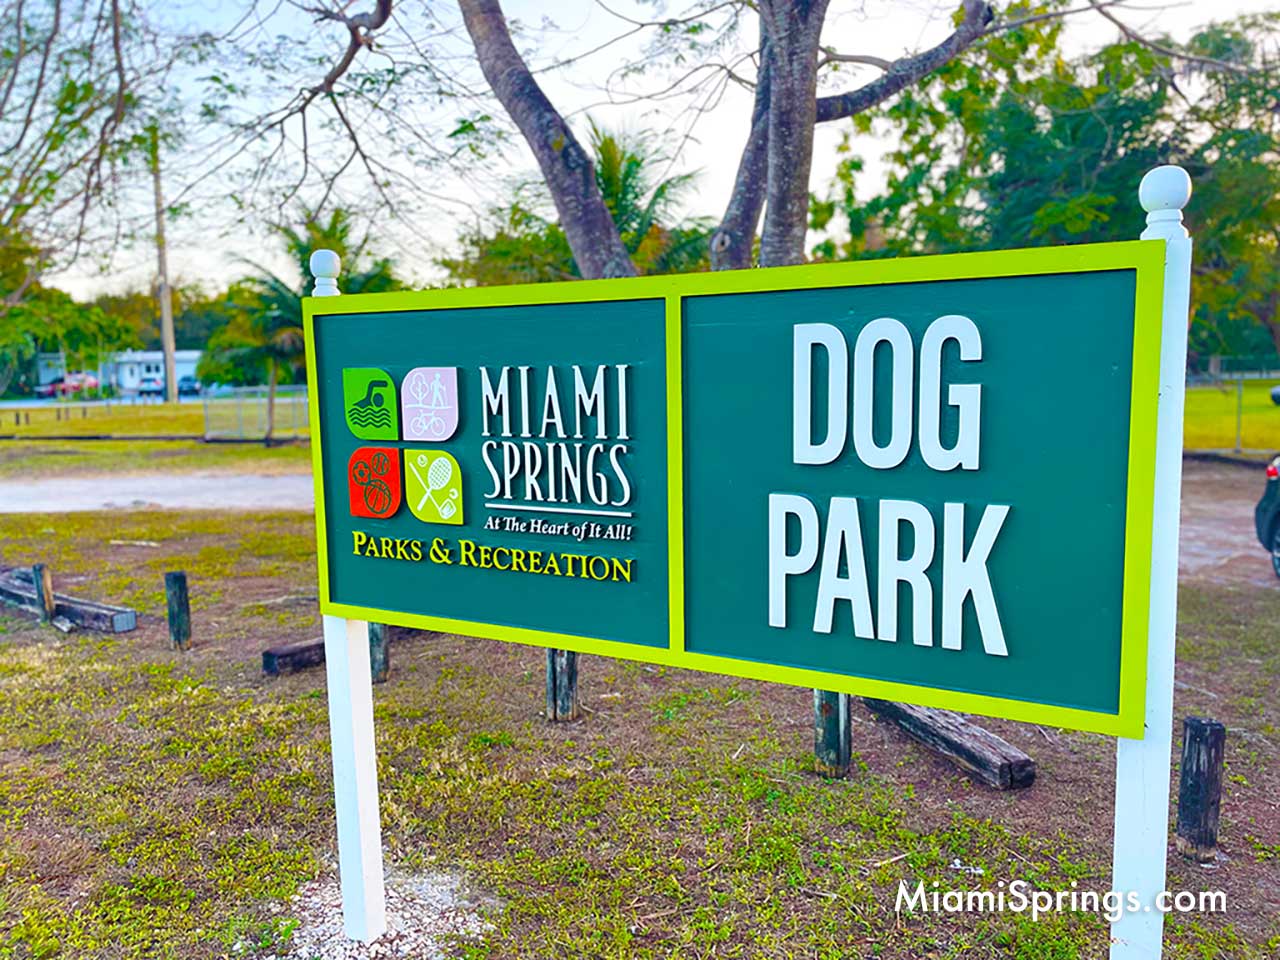 Miami Springs Dog Park